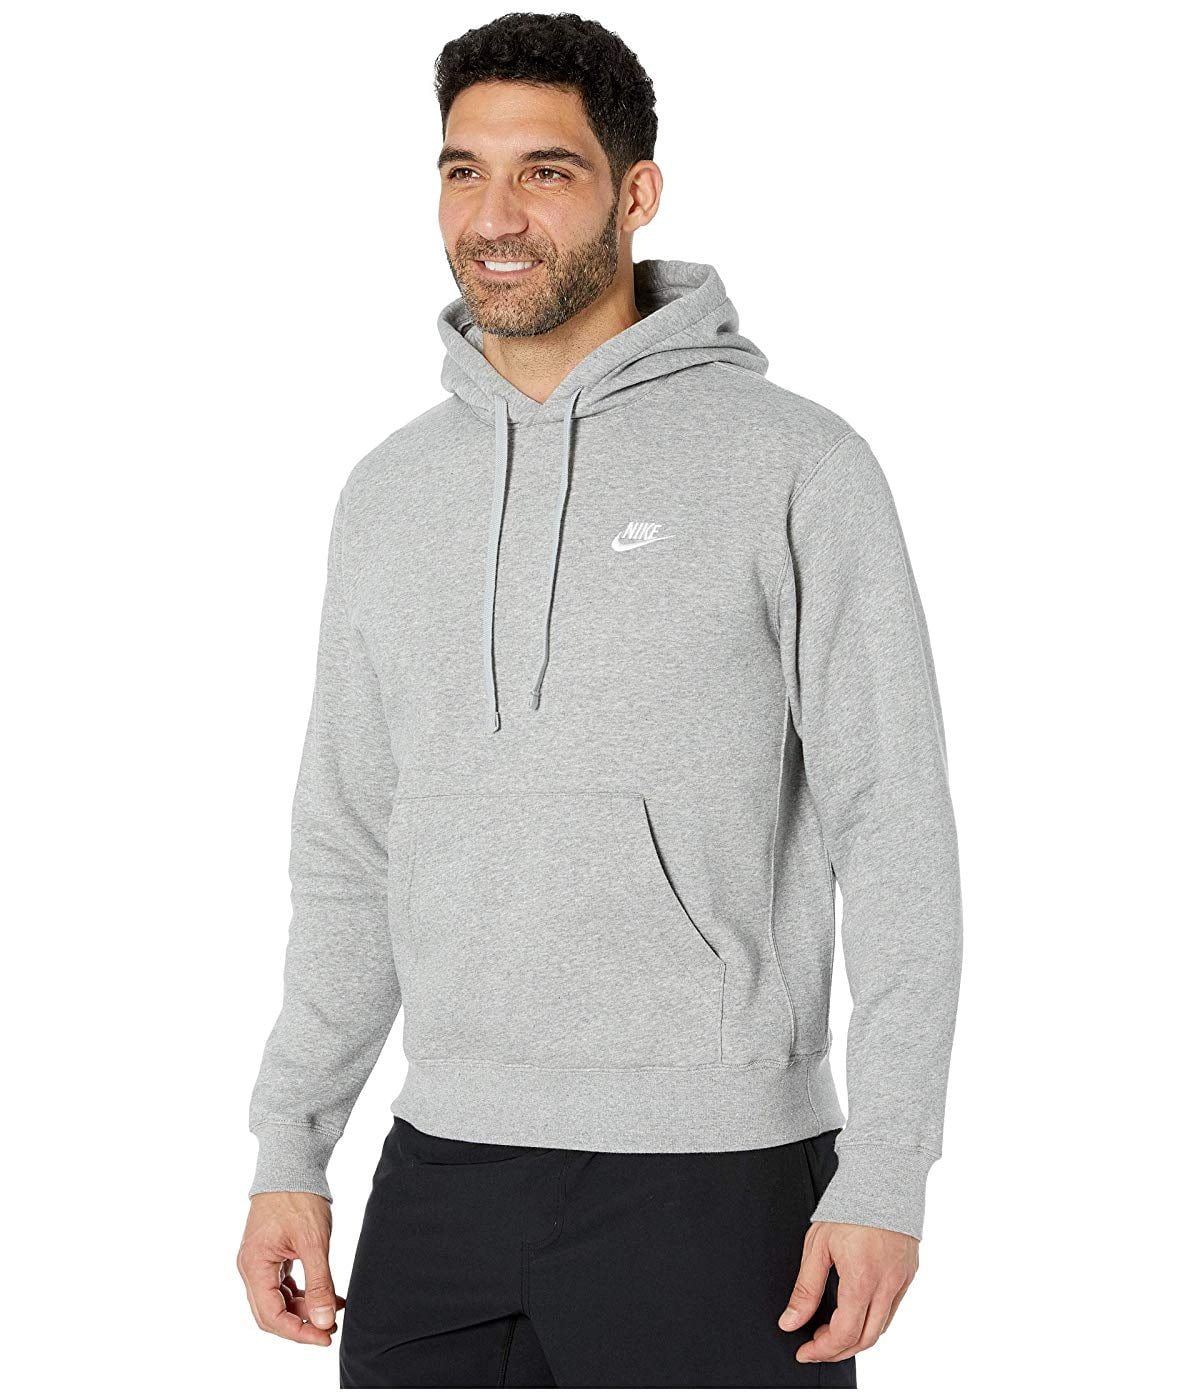 Men's Nike Midnight Navy/White Sportswear Club Fleece Pullover Hoodie  (BV2654 410) - M